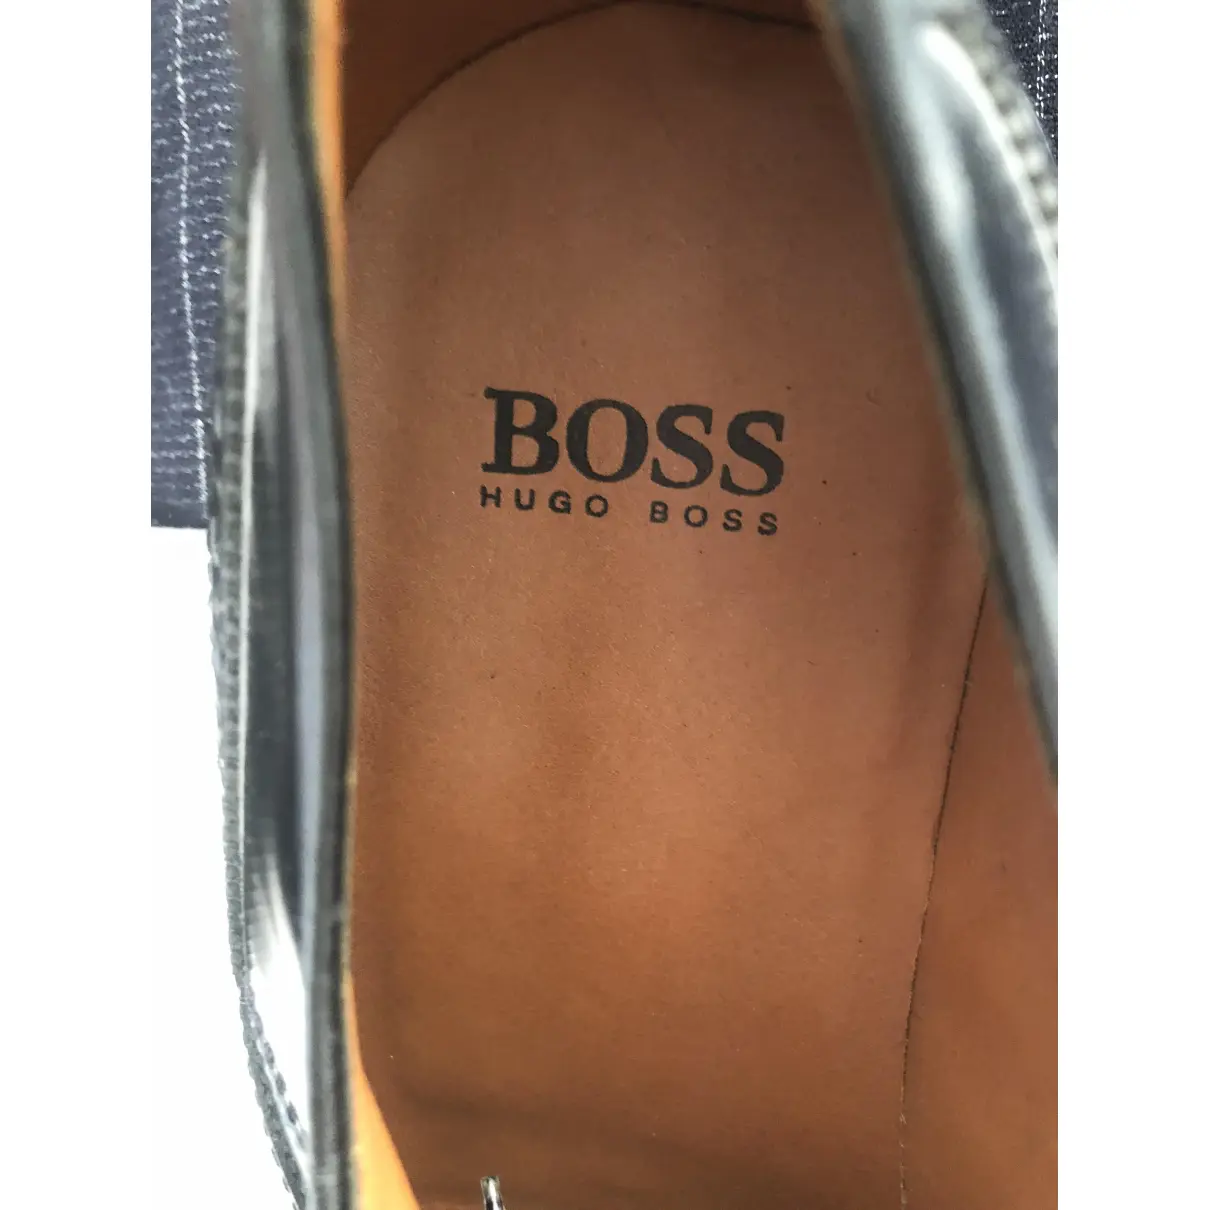 Leather lace ups Hugo Boss